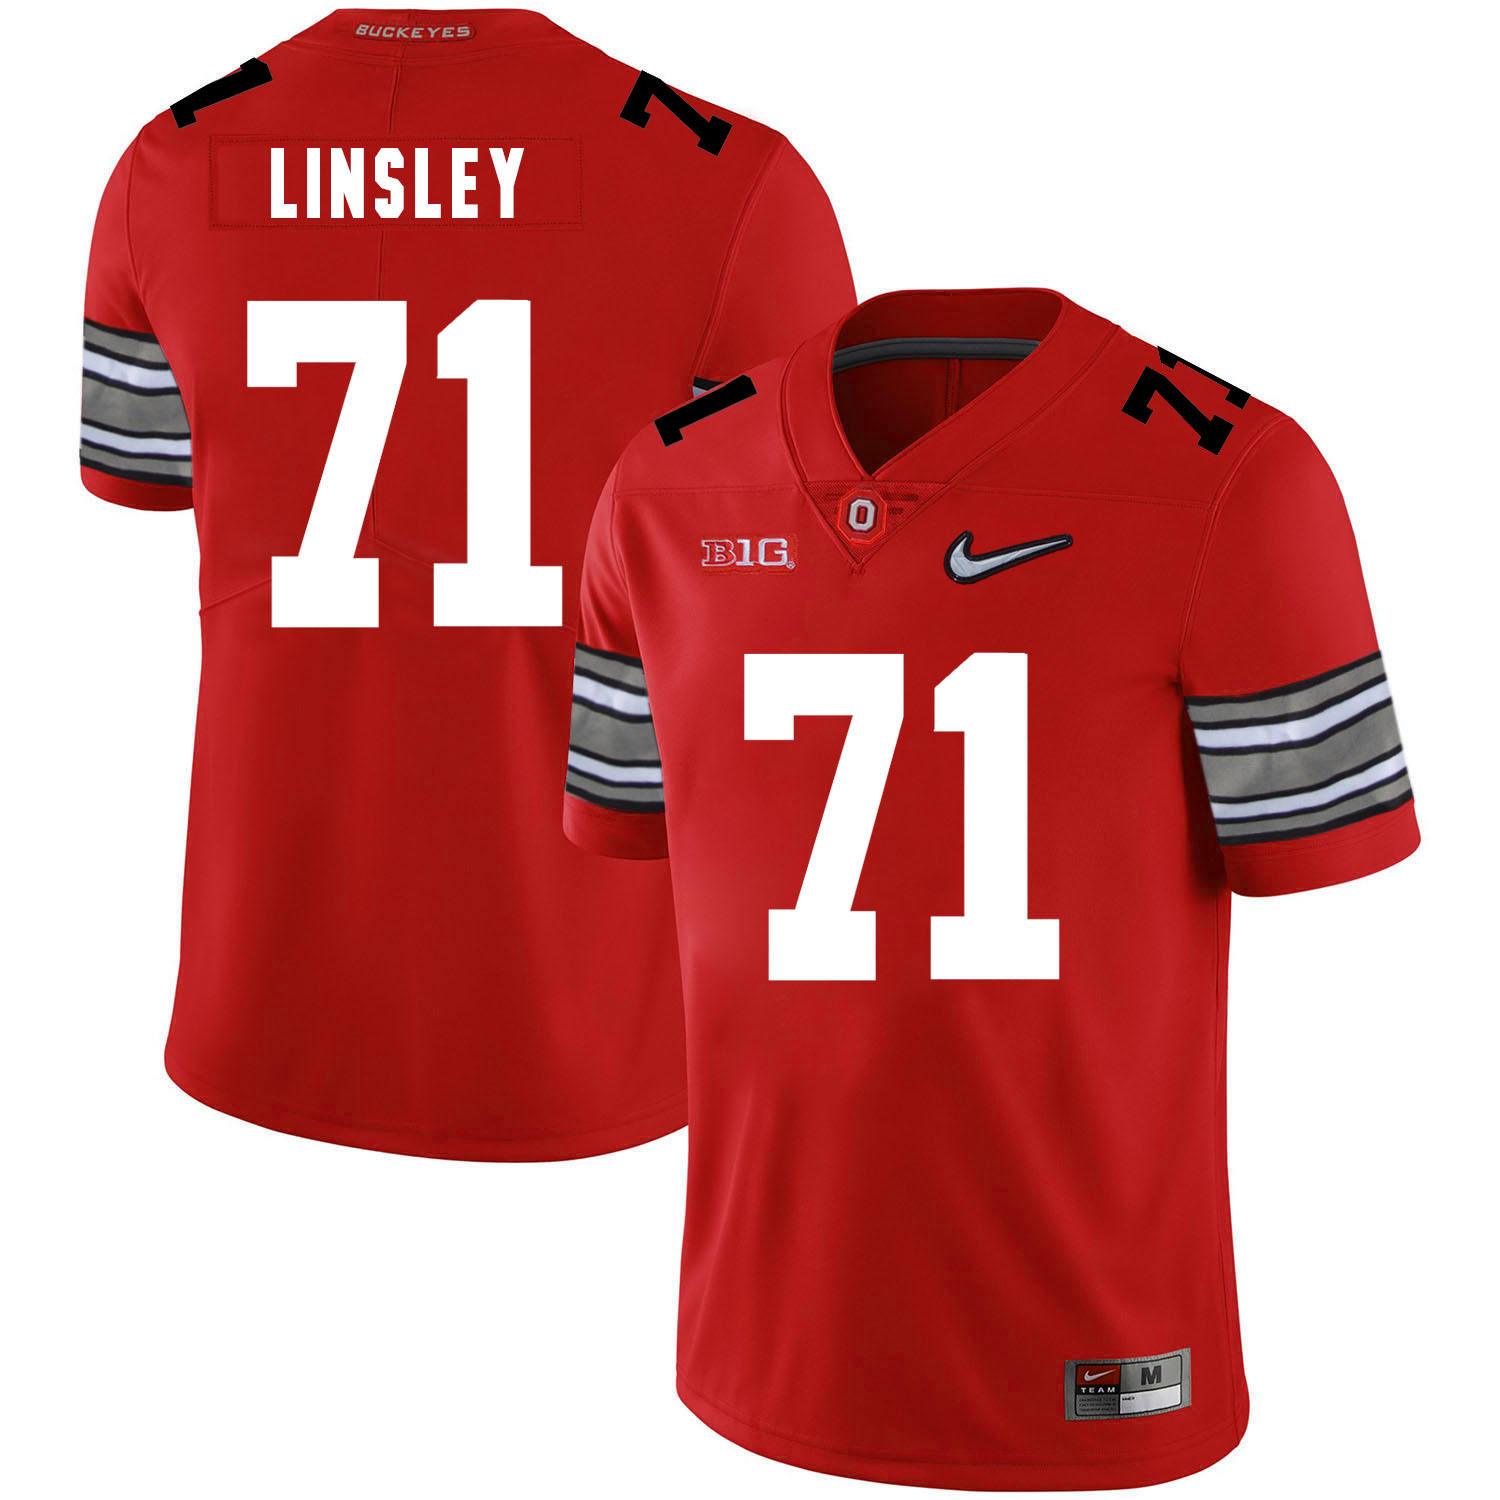 Ohio State Buckeyes 71 Corey Linsley Red Diamond Nike Logo College Football Jersey